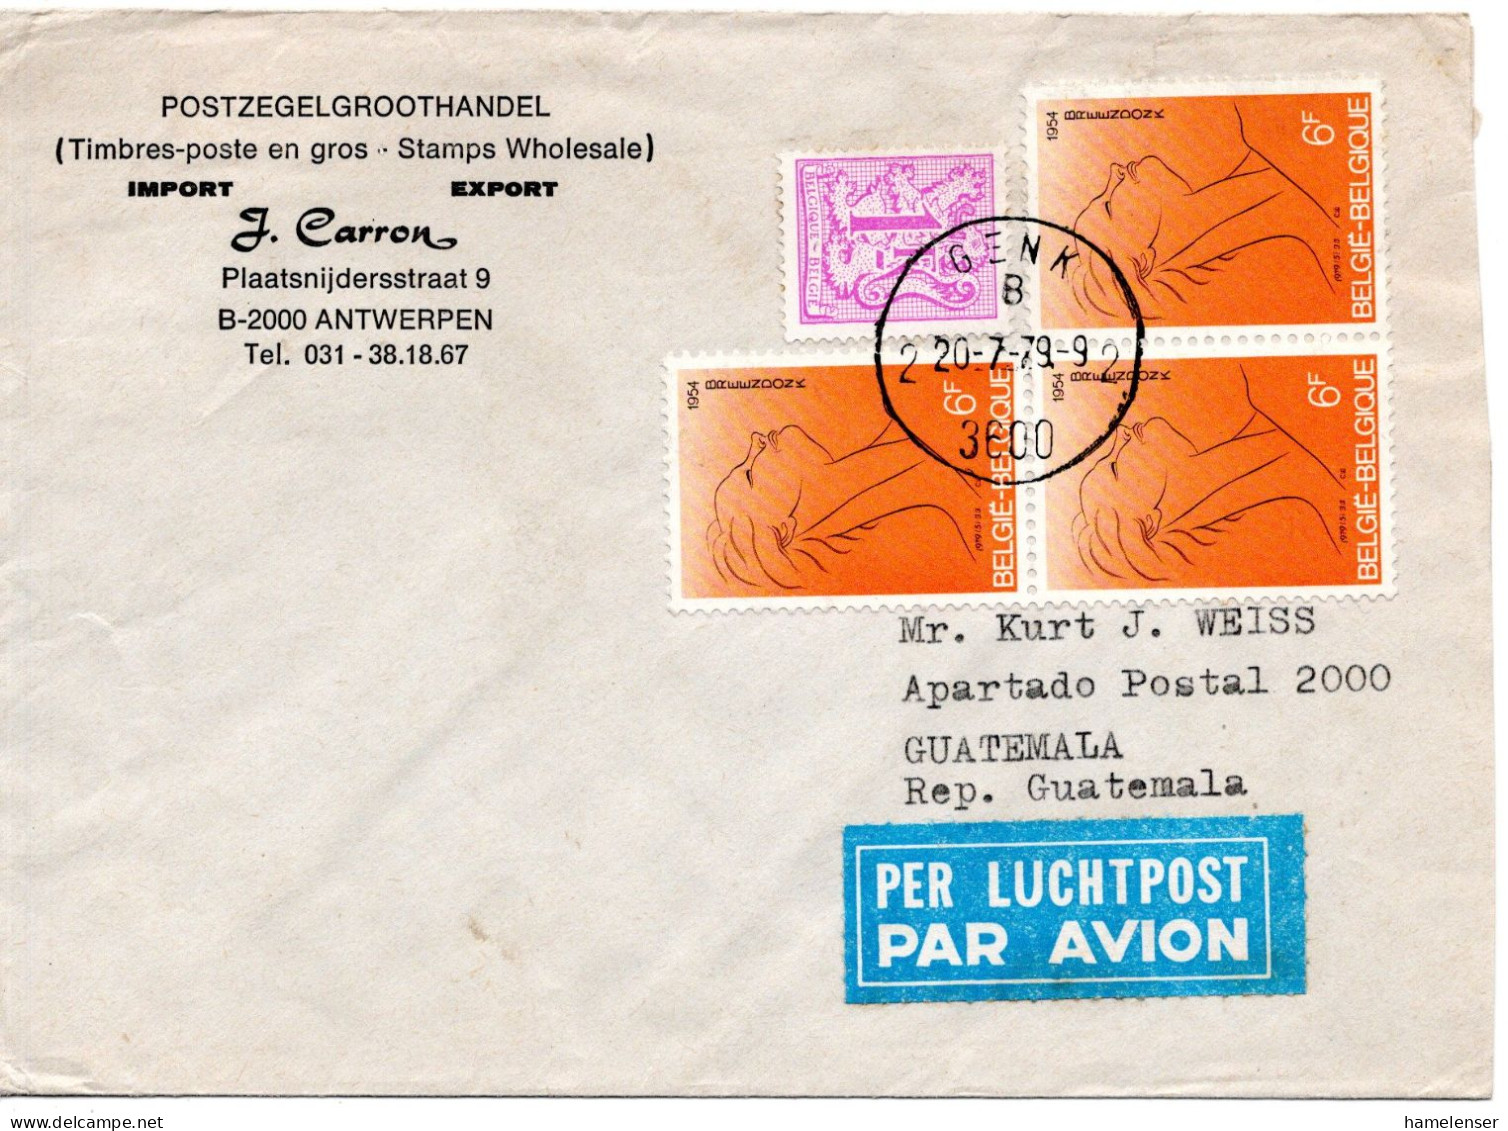 68225 - Belgien - 1979 - 3@6F Breendonk MiF A LpBf GENK -> Guatemala - Lettres & Documents